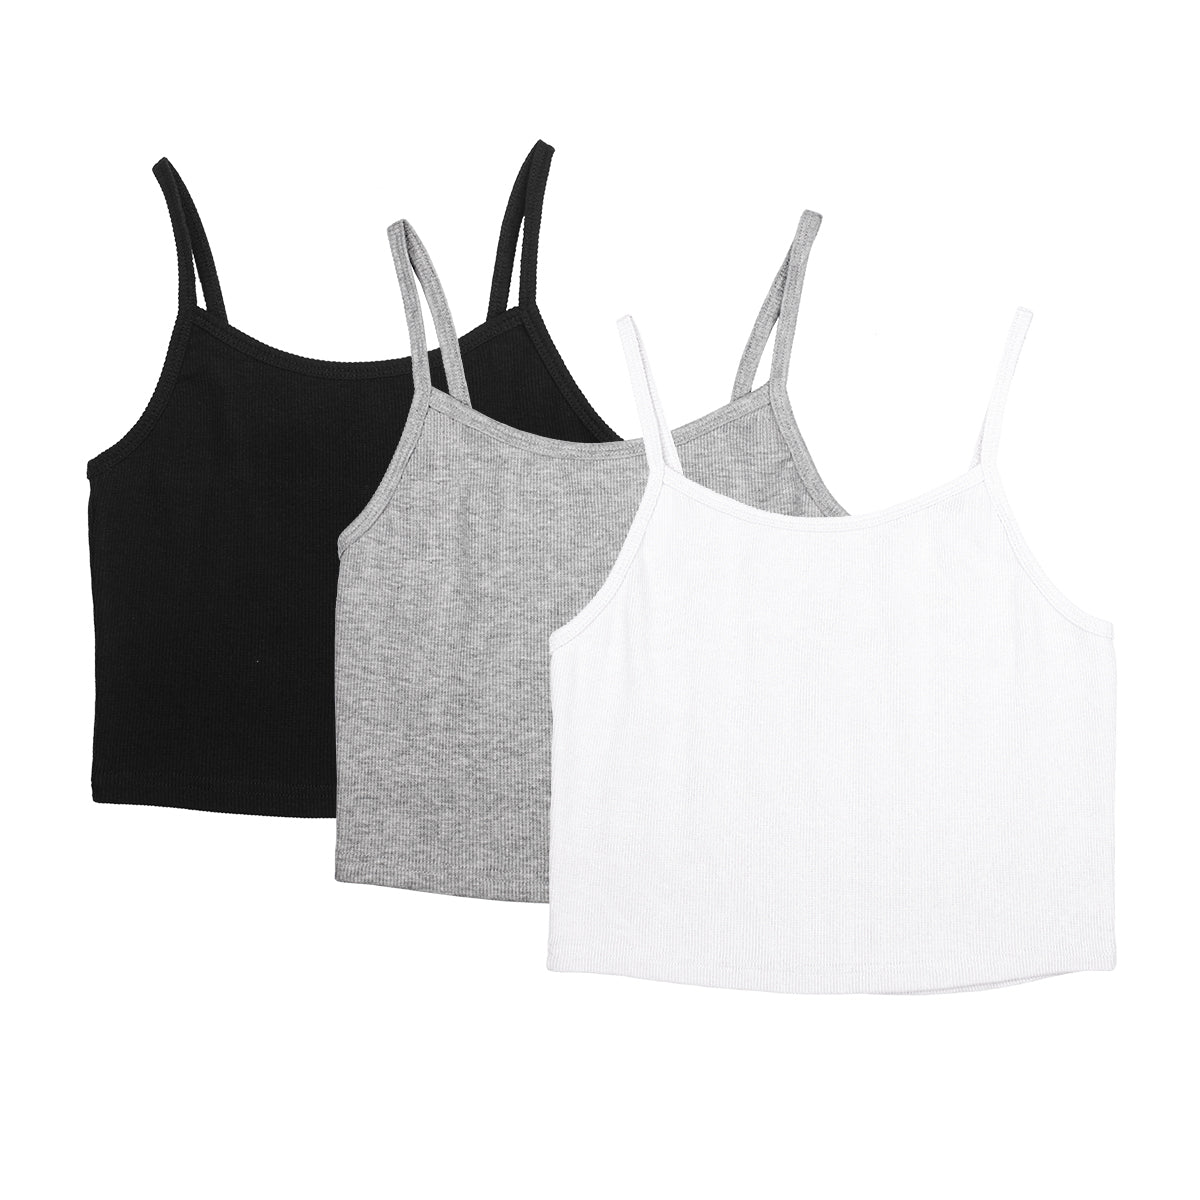 Women's Tank & Cami Tops, White, Black & Cropped